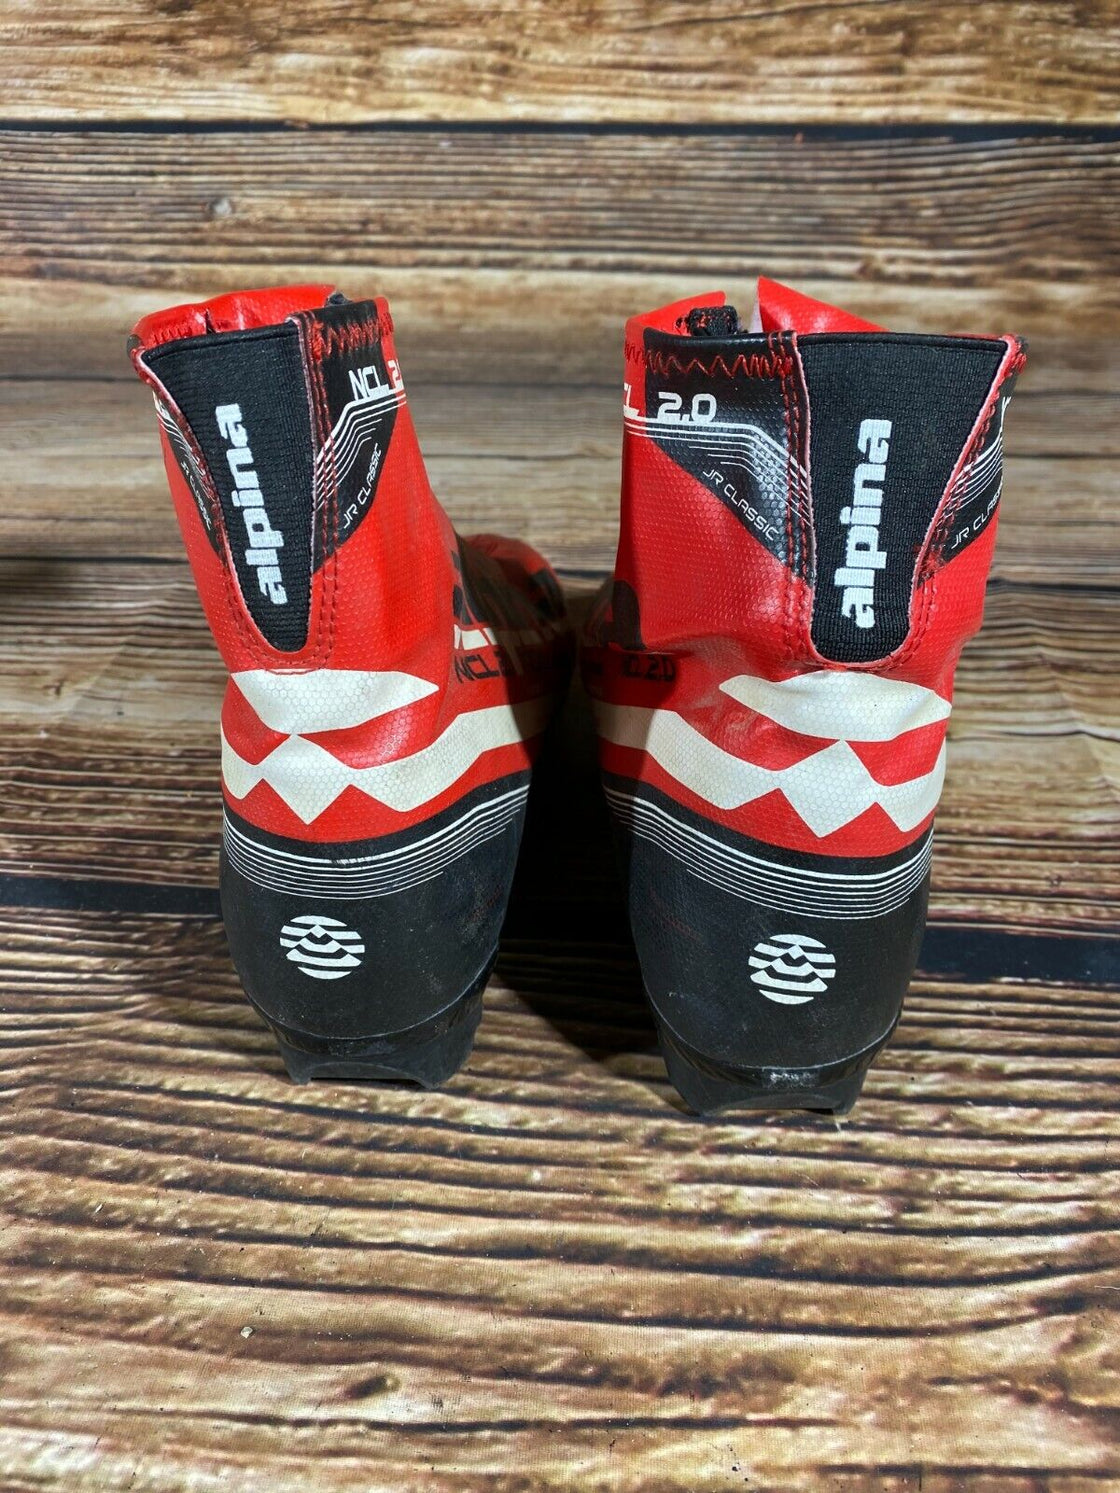 Alpina NCL 2.0 Racing Nordic Cross Country Ski Boots Size EU39 US7 NNN